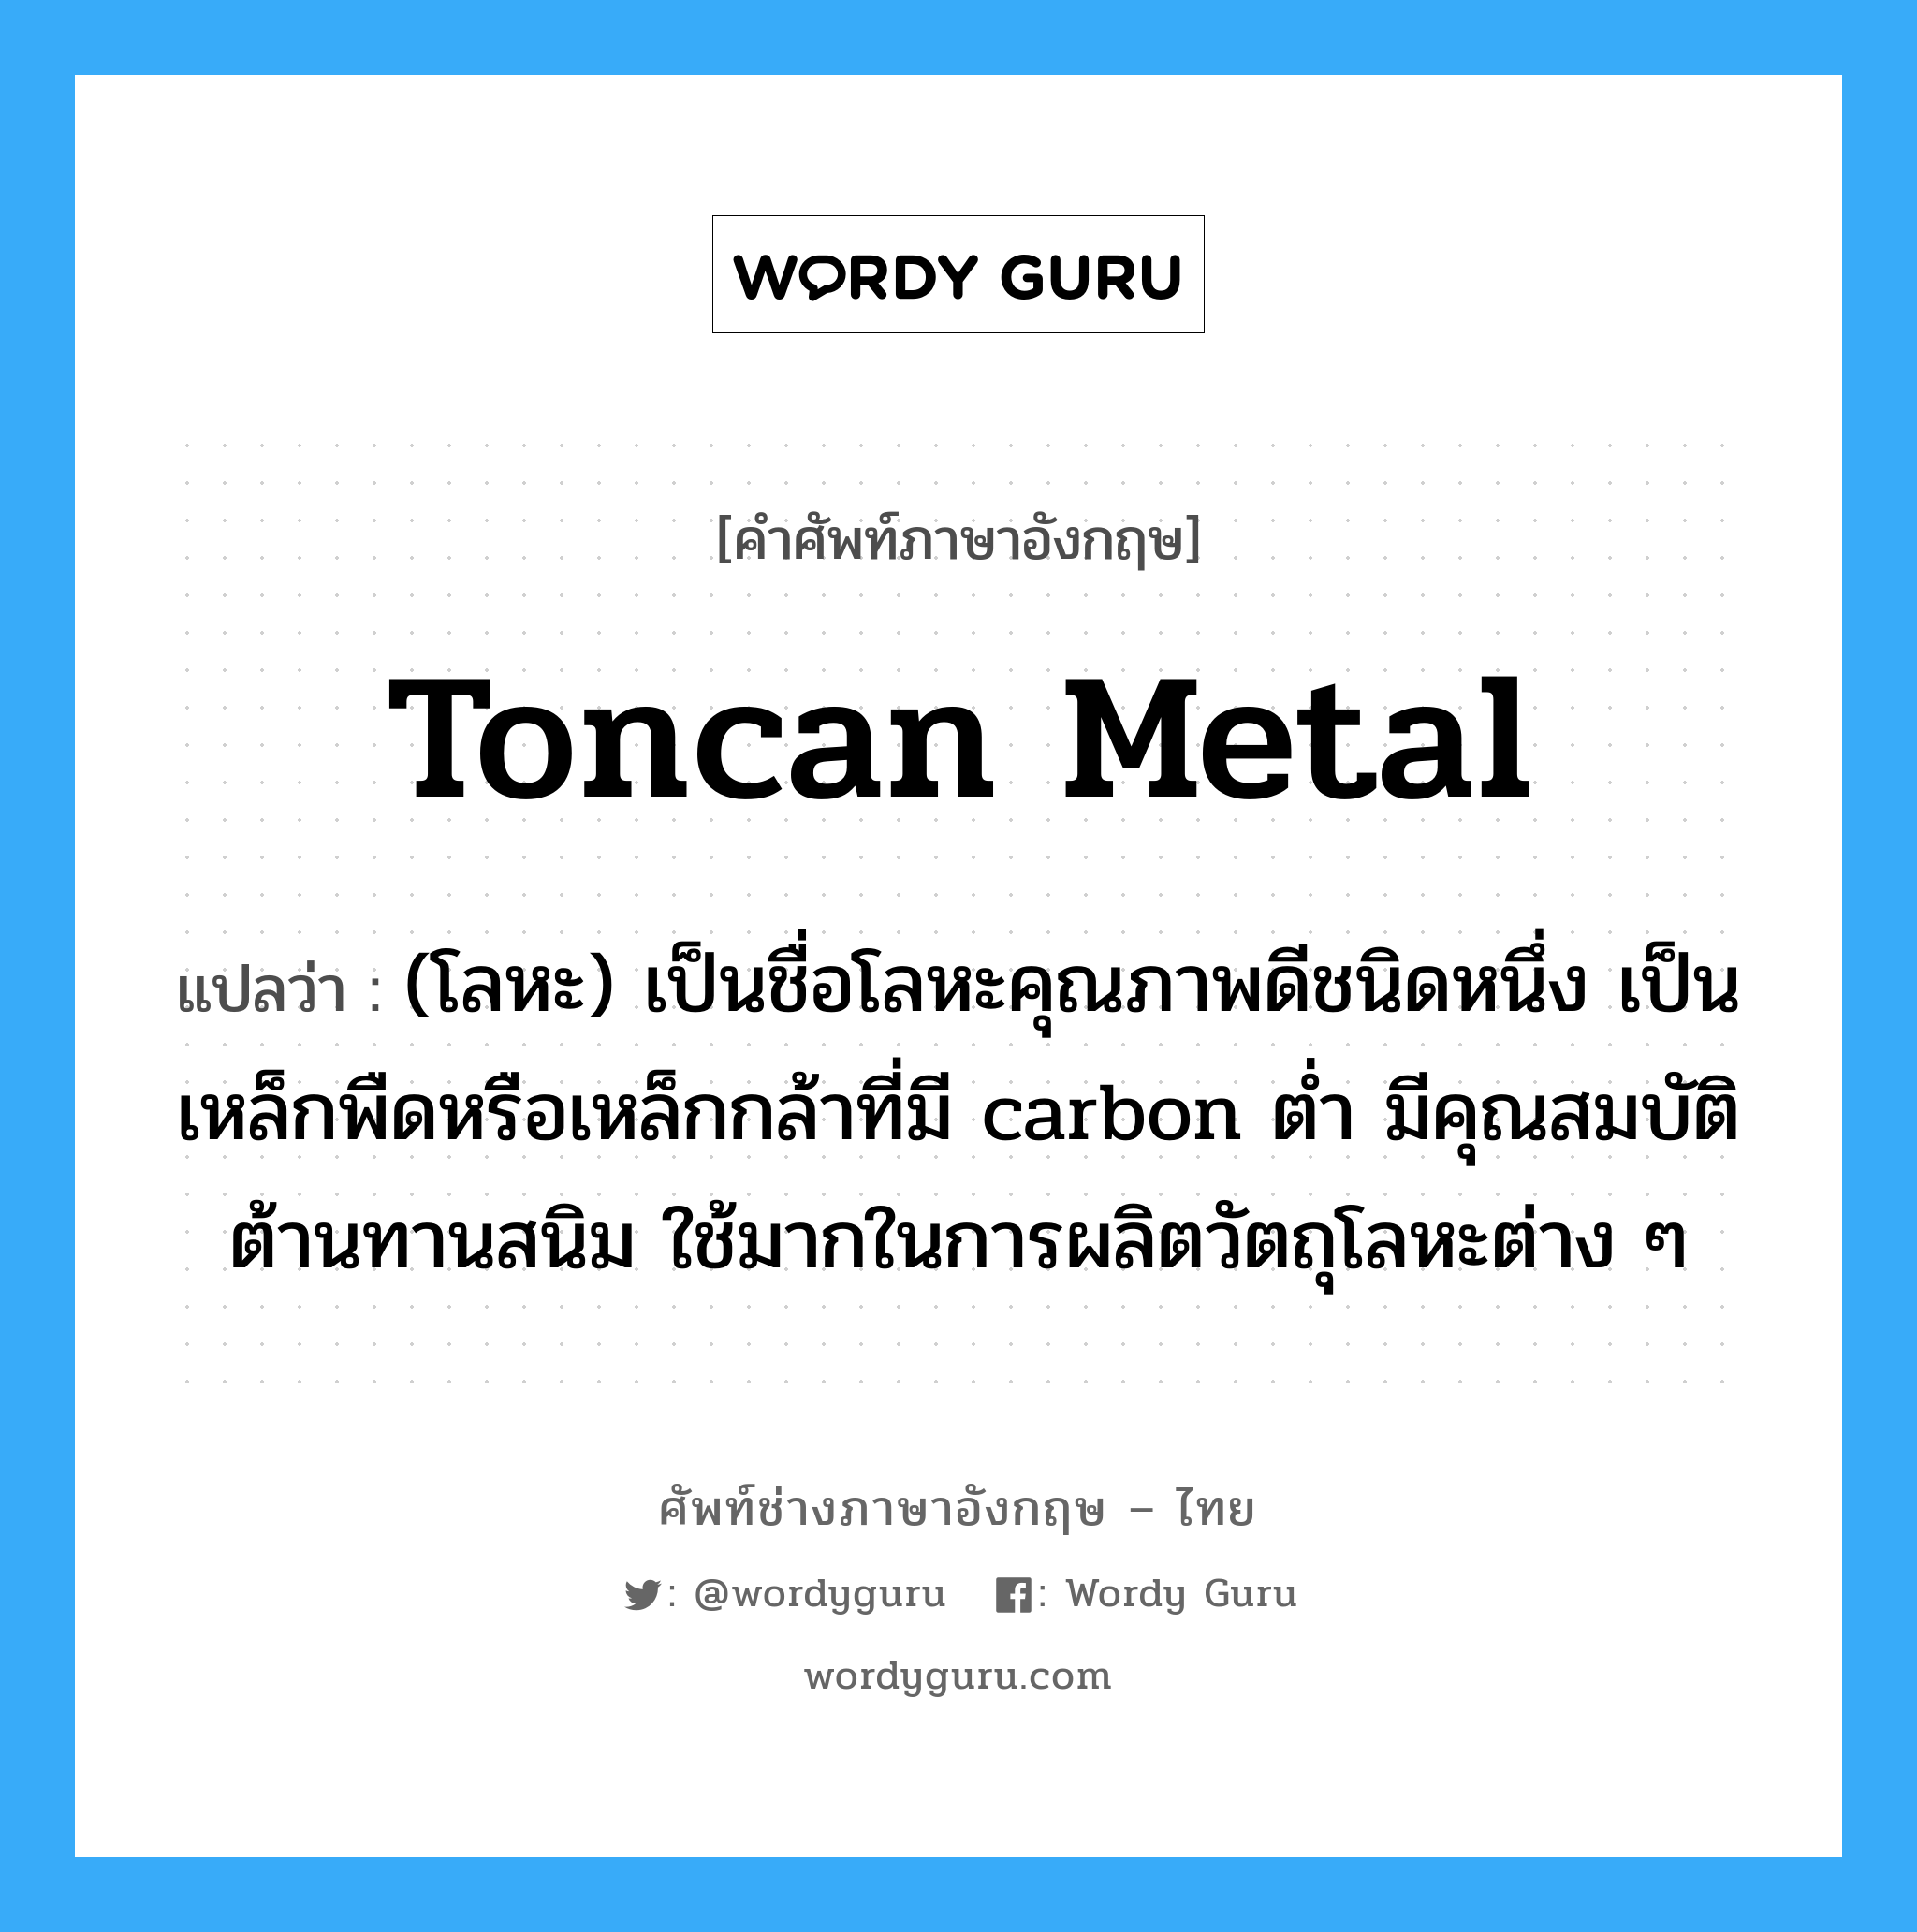 toncan metal แปลว่า?, คำศัพท์ช่างภาษาอังกฤษ - ไทย toncan metal คำศัพท์ภาษาอังกฤษ toncan metal แปลว่า (โลหะ) เป็นชื่อโลหะคุณภาพดีชนิดหนึ่ง เป็นเหล็กพืดหรือเหล็กกล้าที่มี carbon ต่ำ มีคุณสมบัติต้านทานสนิม ใช้มากในการผลิตวัตถุโลหะต่าง ๆ